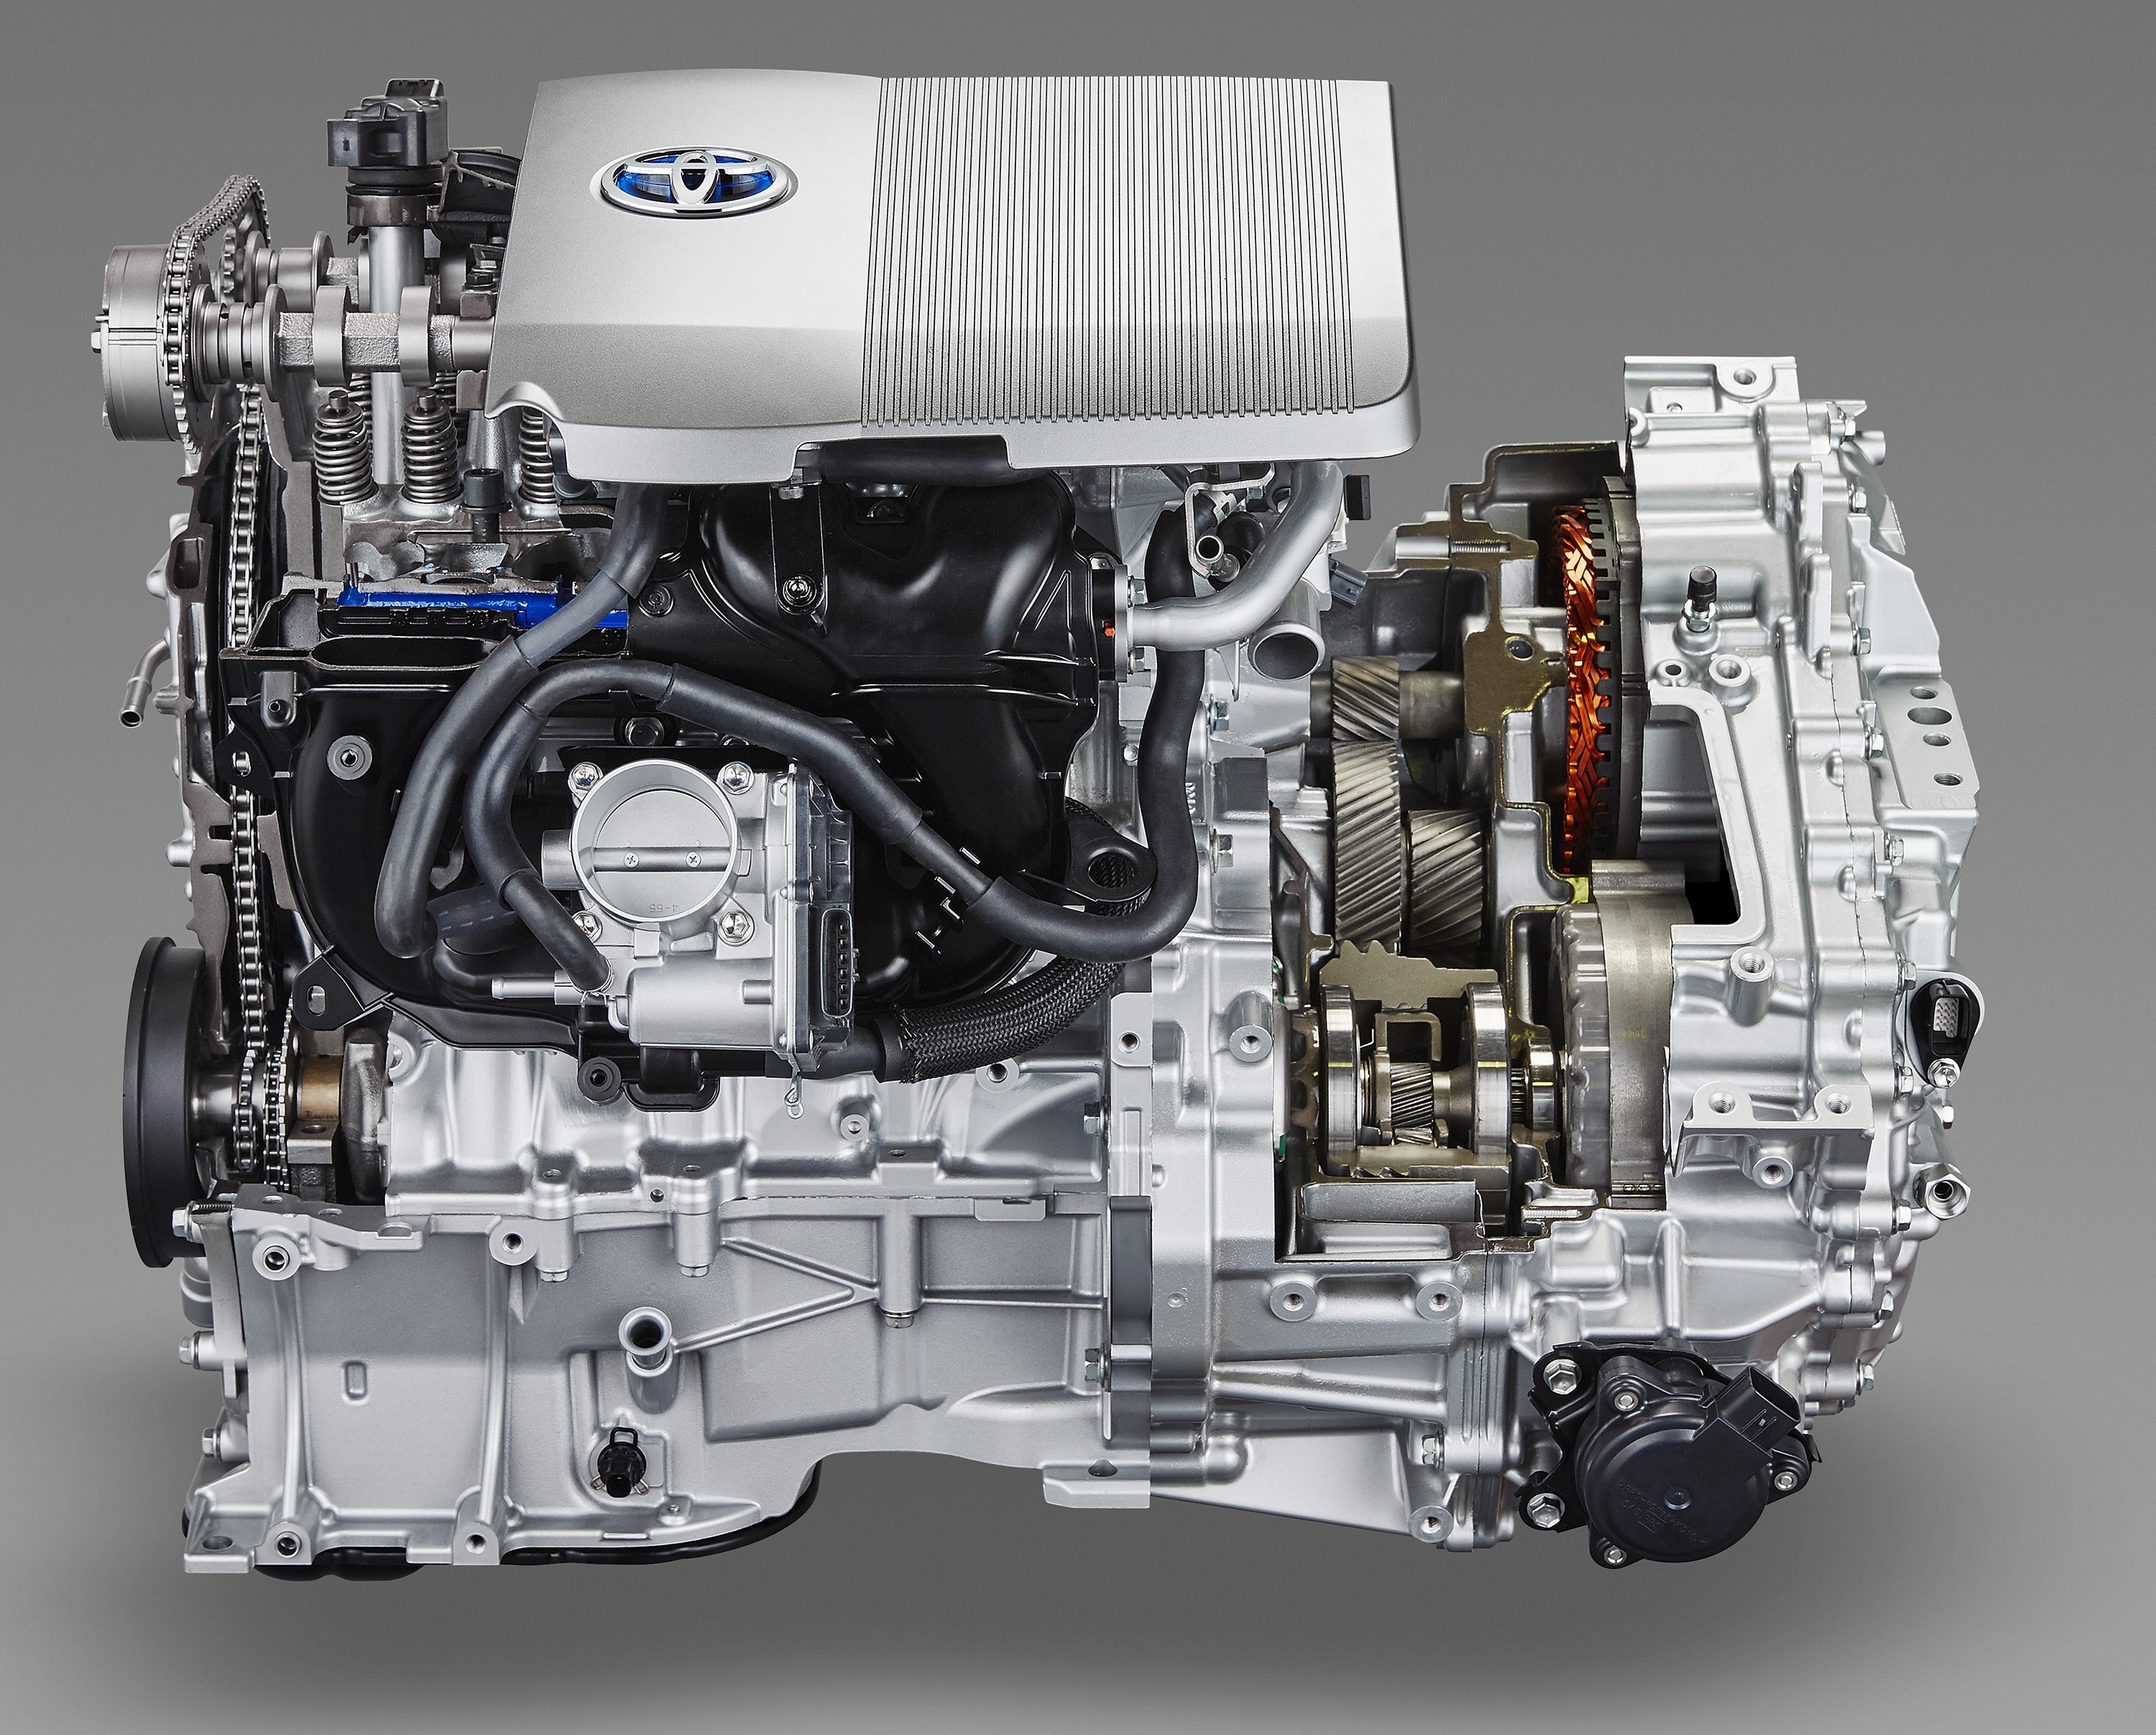 Hybrid Car Engine Diagram 2016 toyota Prius Specifications Revealed Of Hybrid Car Engine Diagram